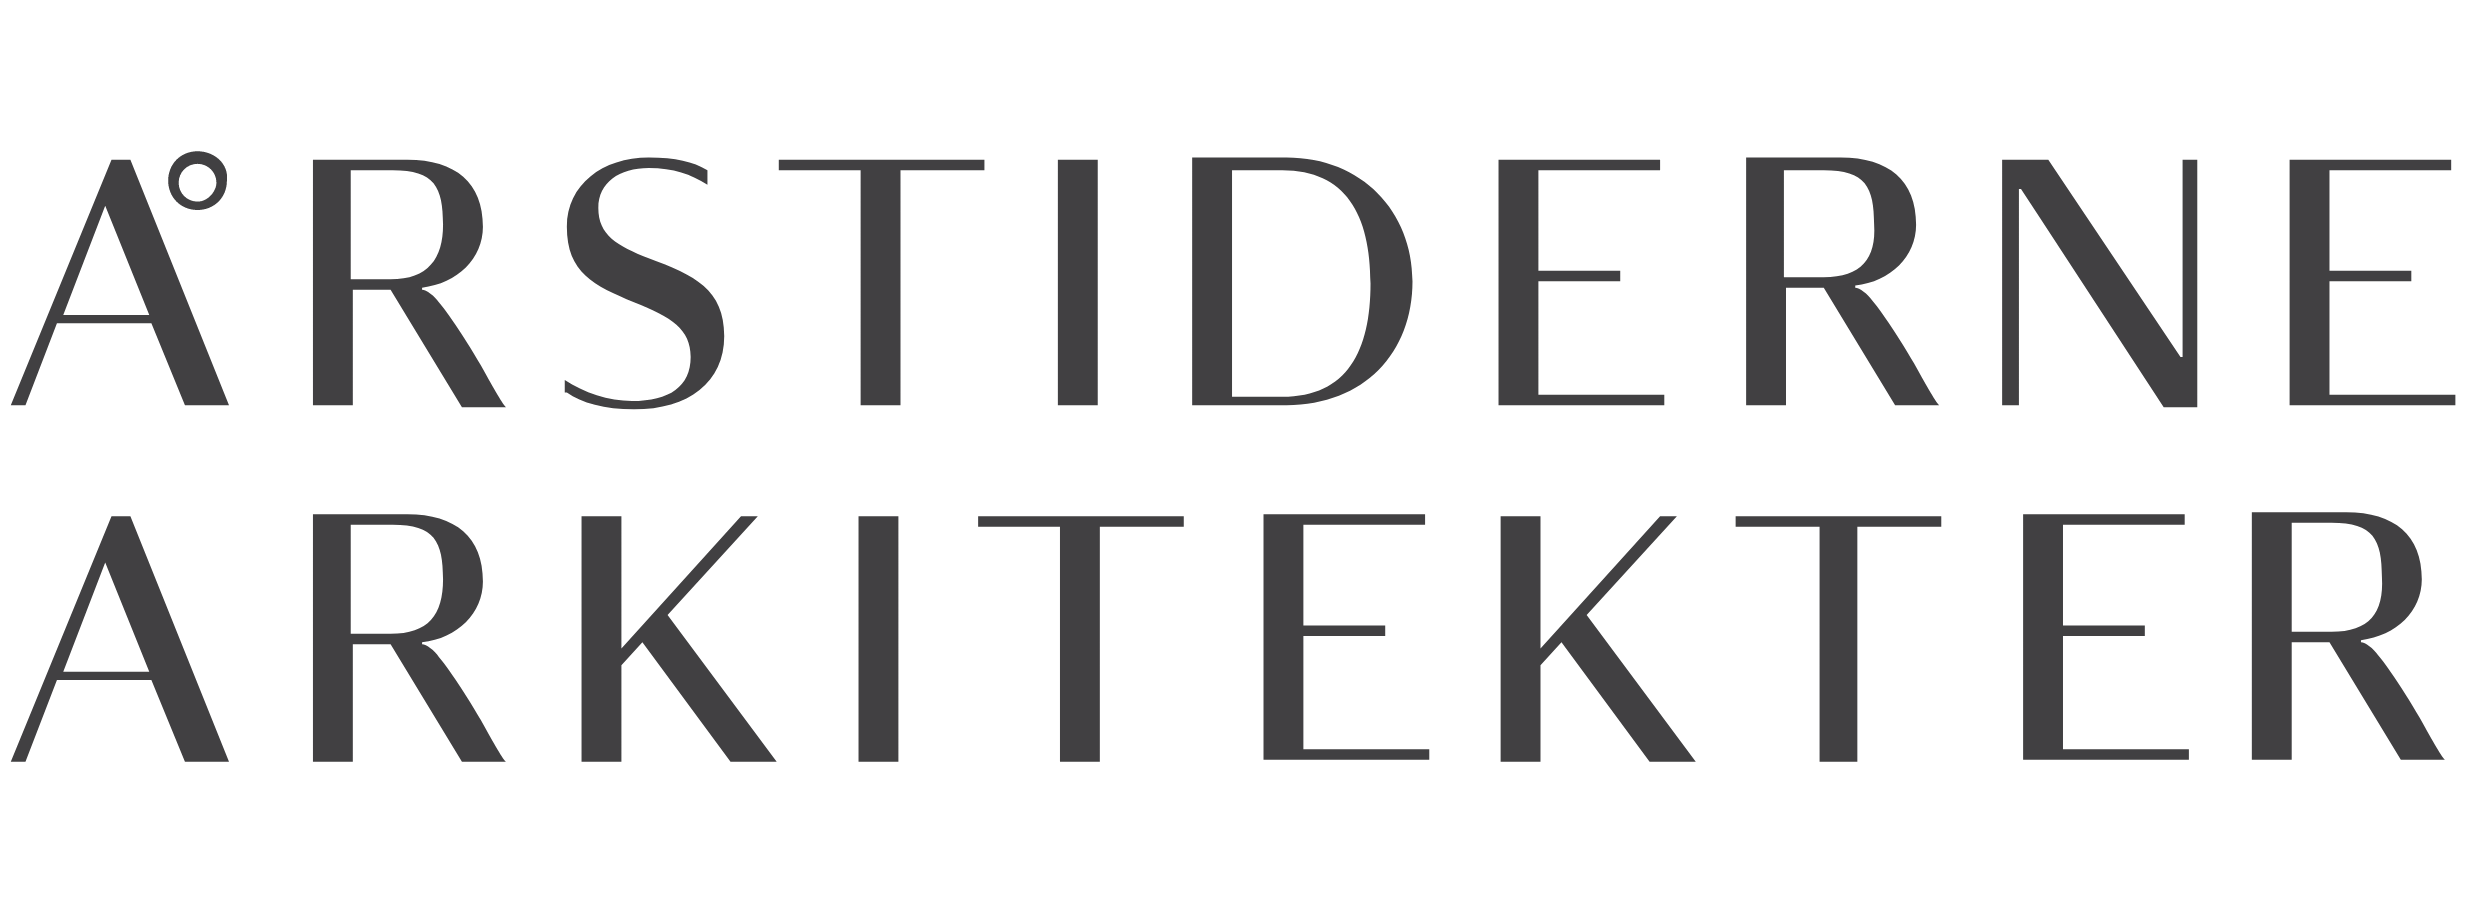 Arstiderne_Arkitekter_Logo